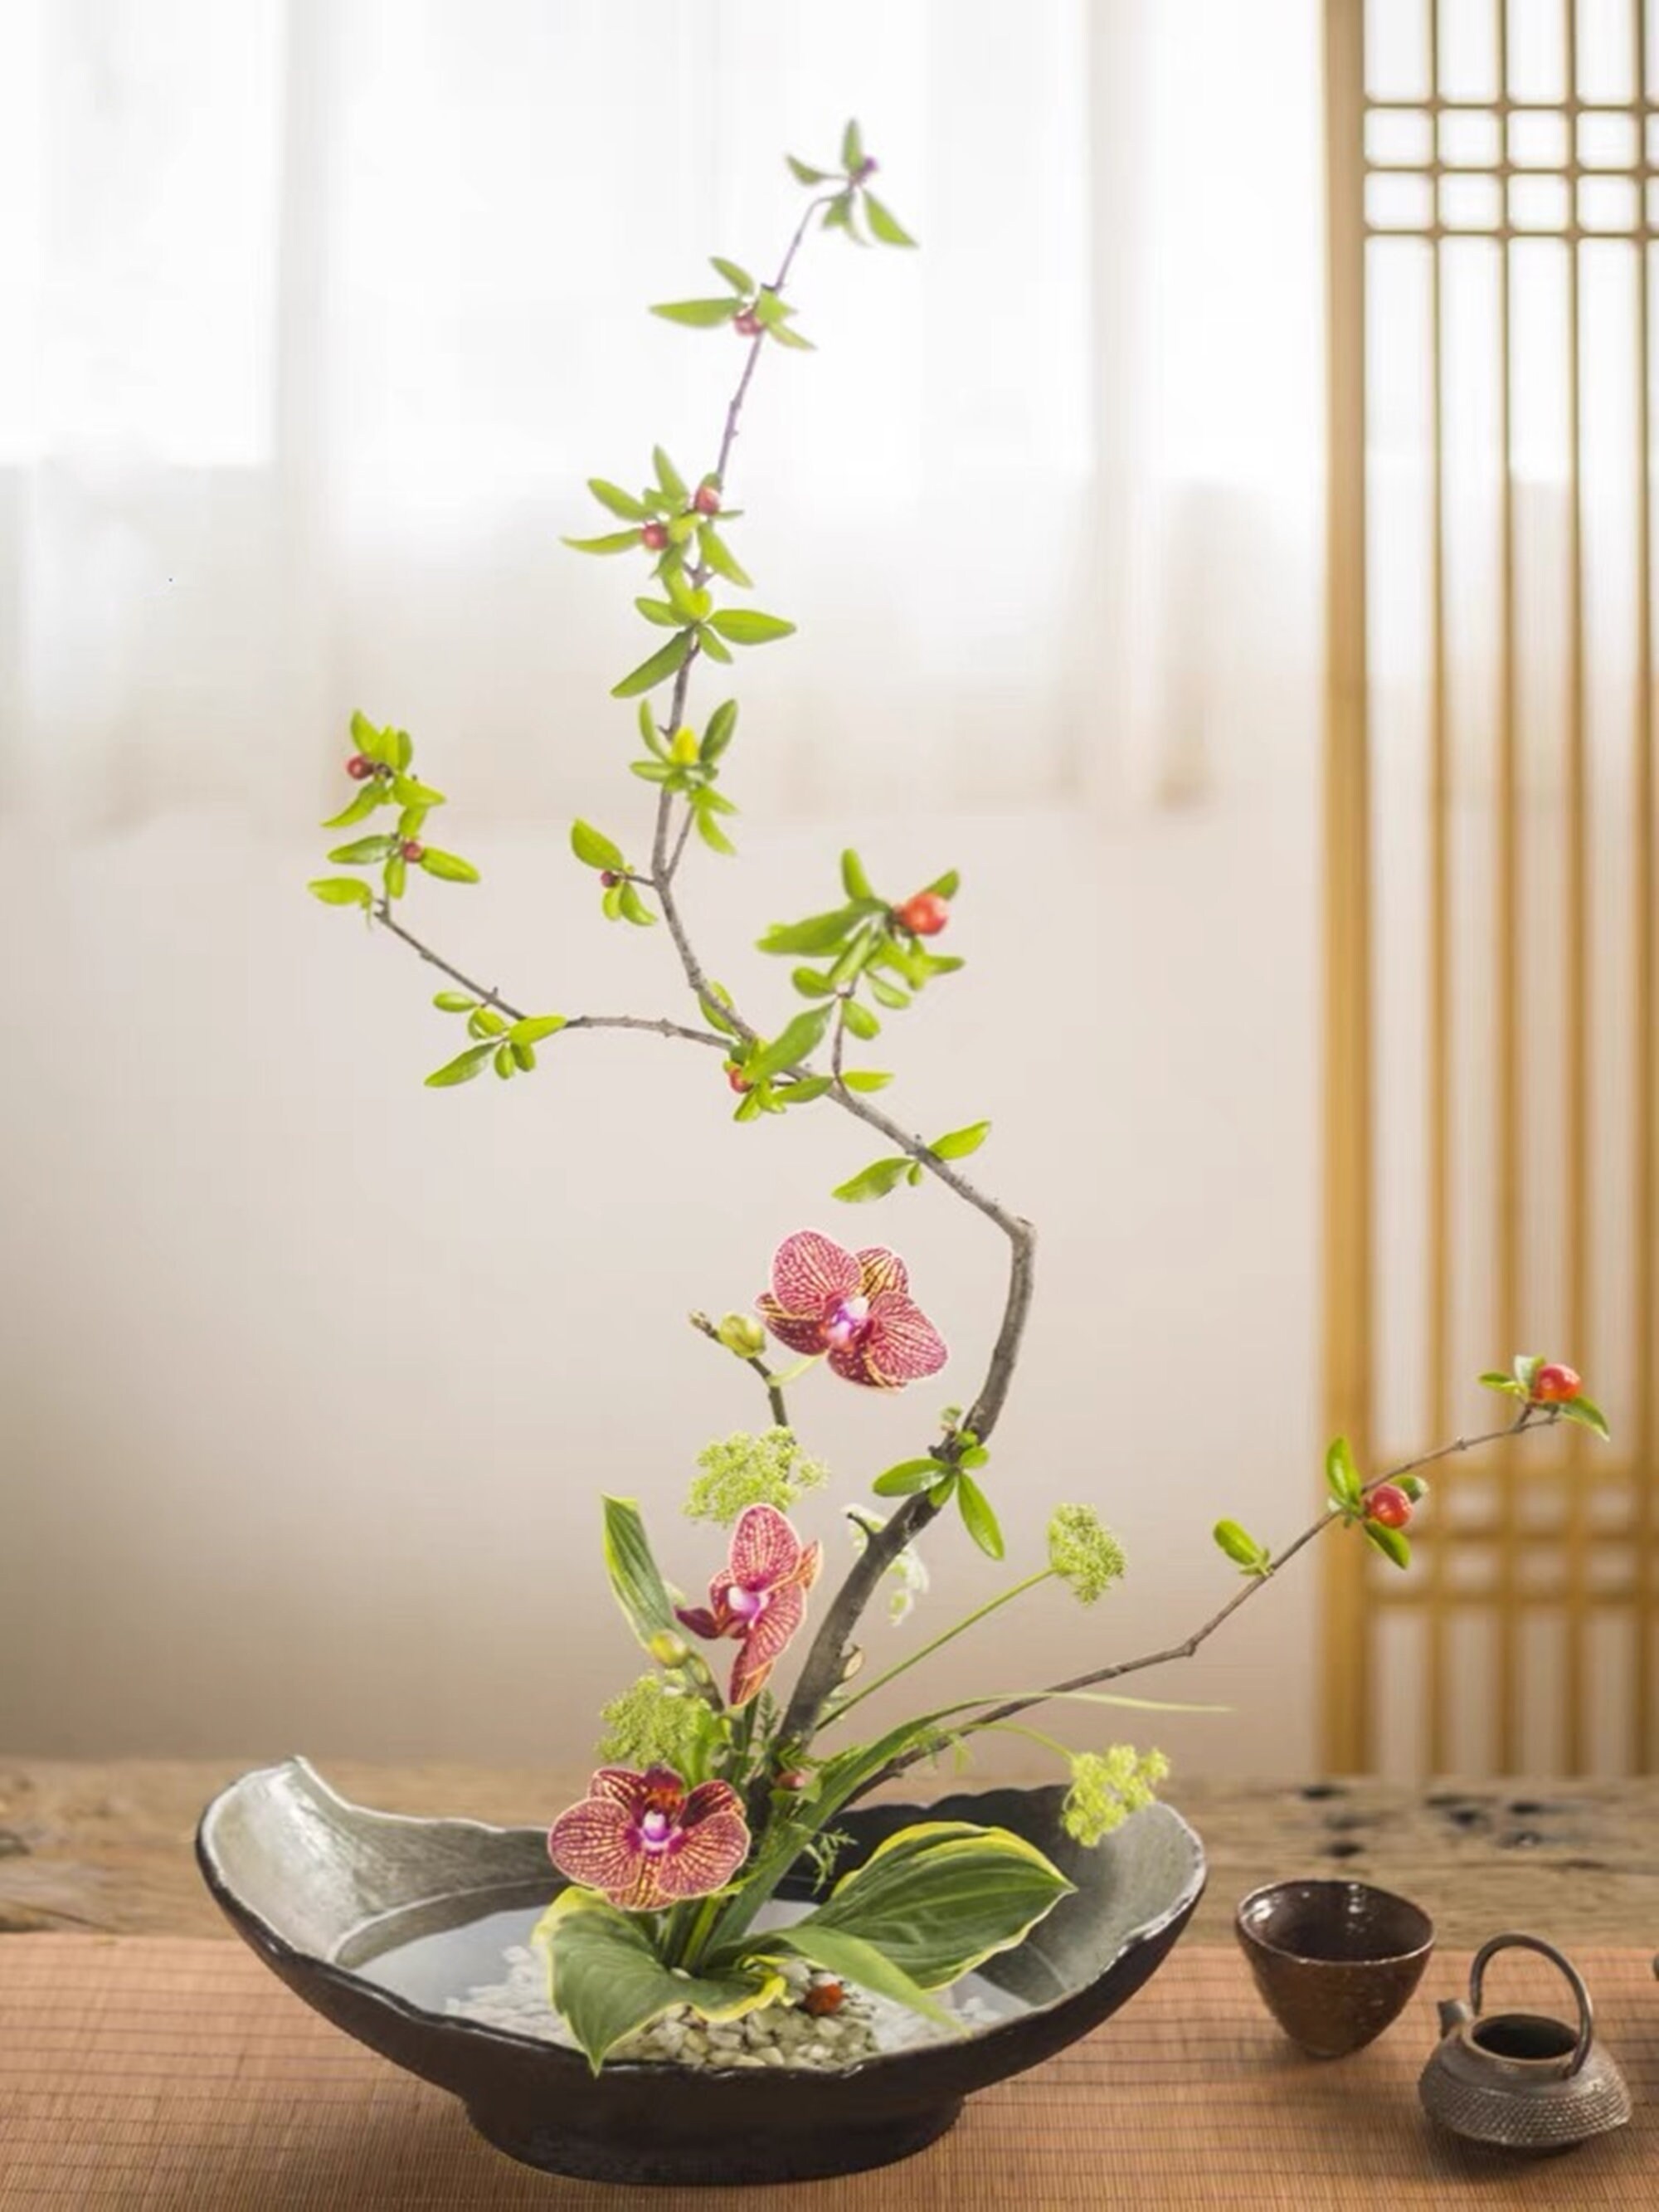 Convivial Ikebana Vase with Kenzan + sett – One Mercantile / Sett